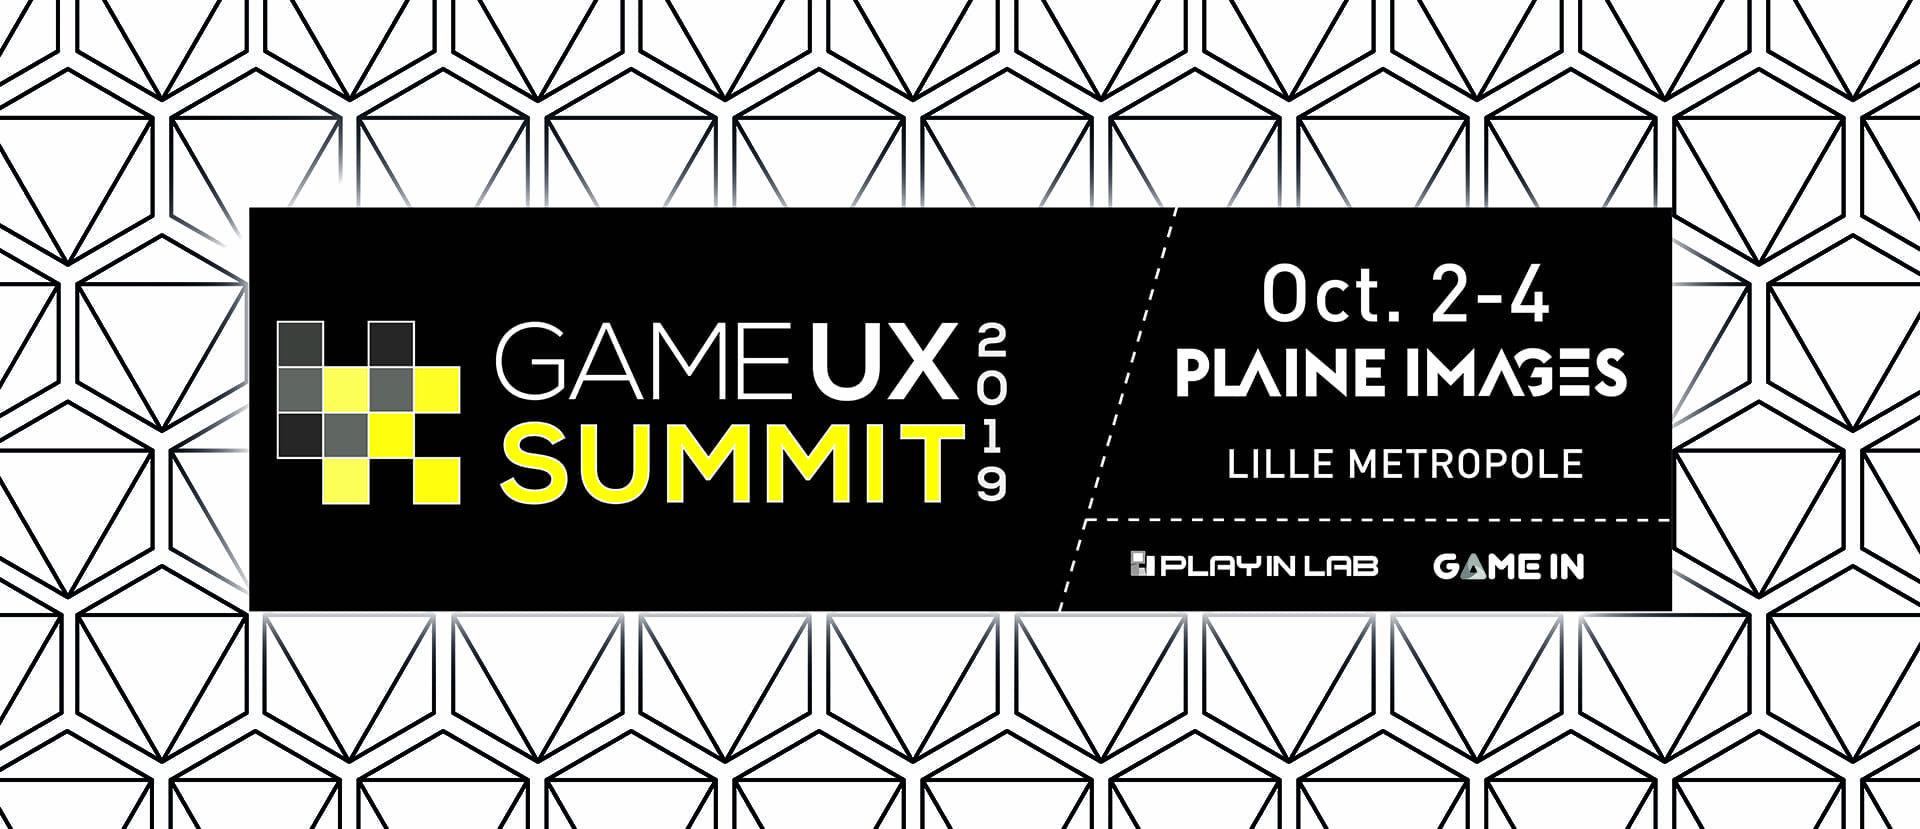 Game UX Summit 19 Plaine Images